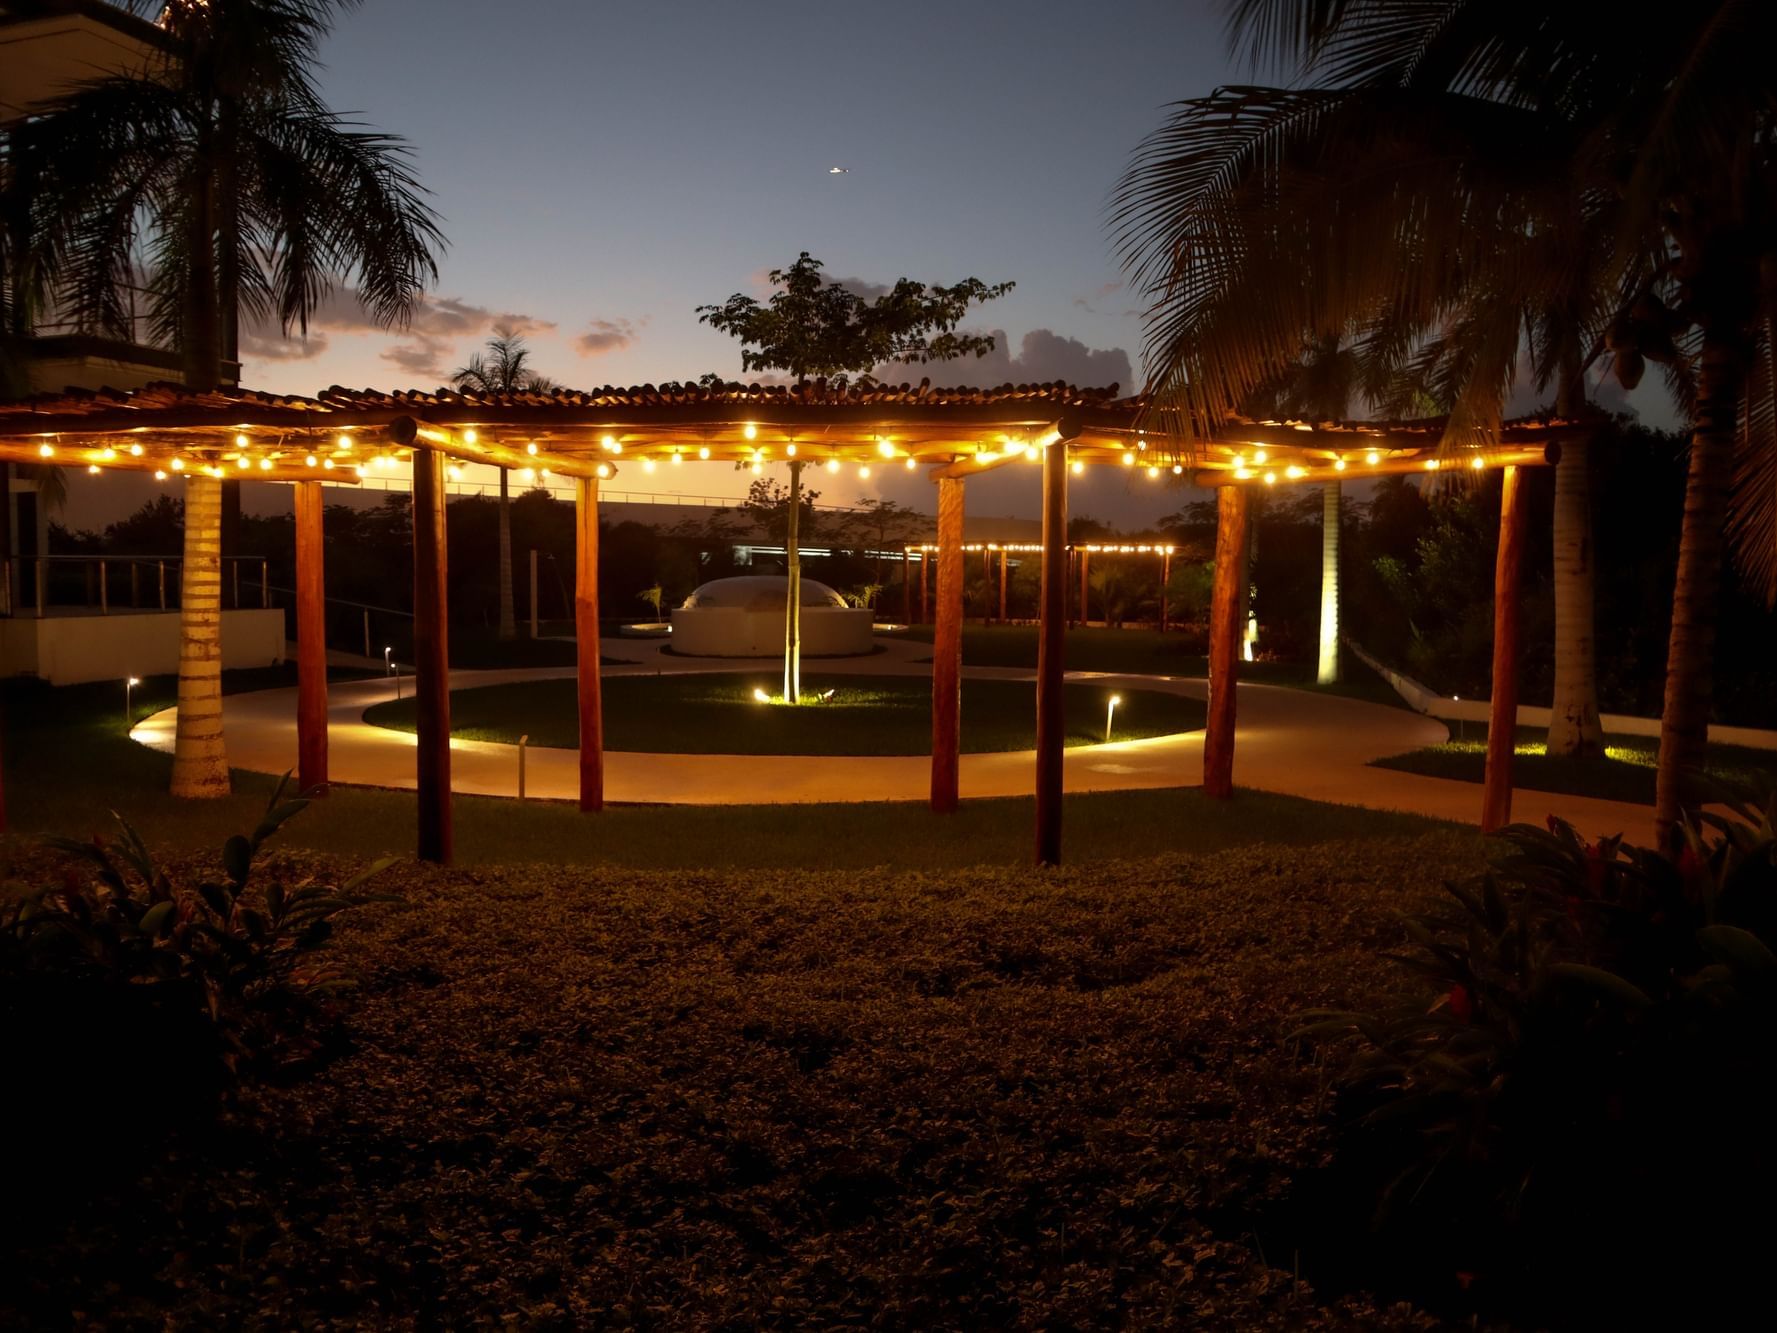 Exterior view of the gazebo at night at Haven Riviera Cancun